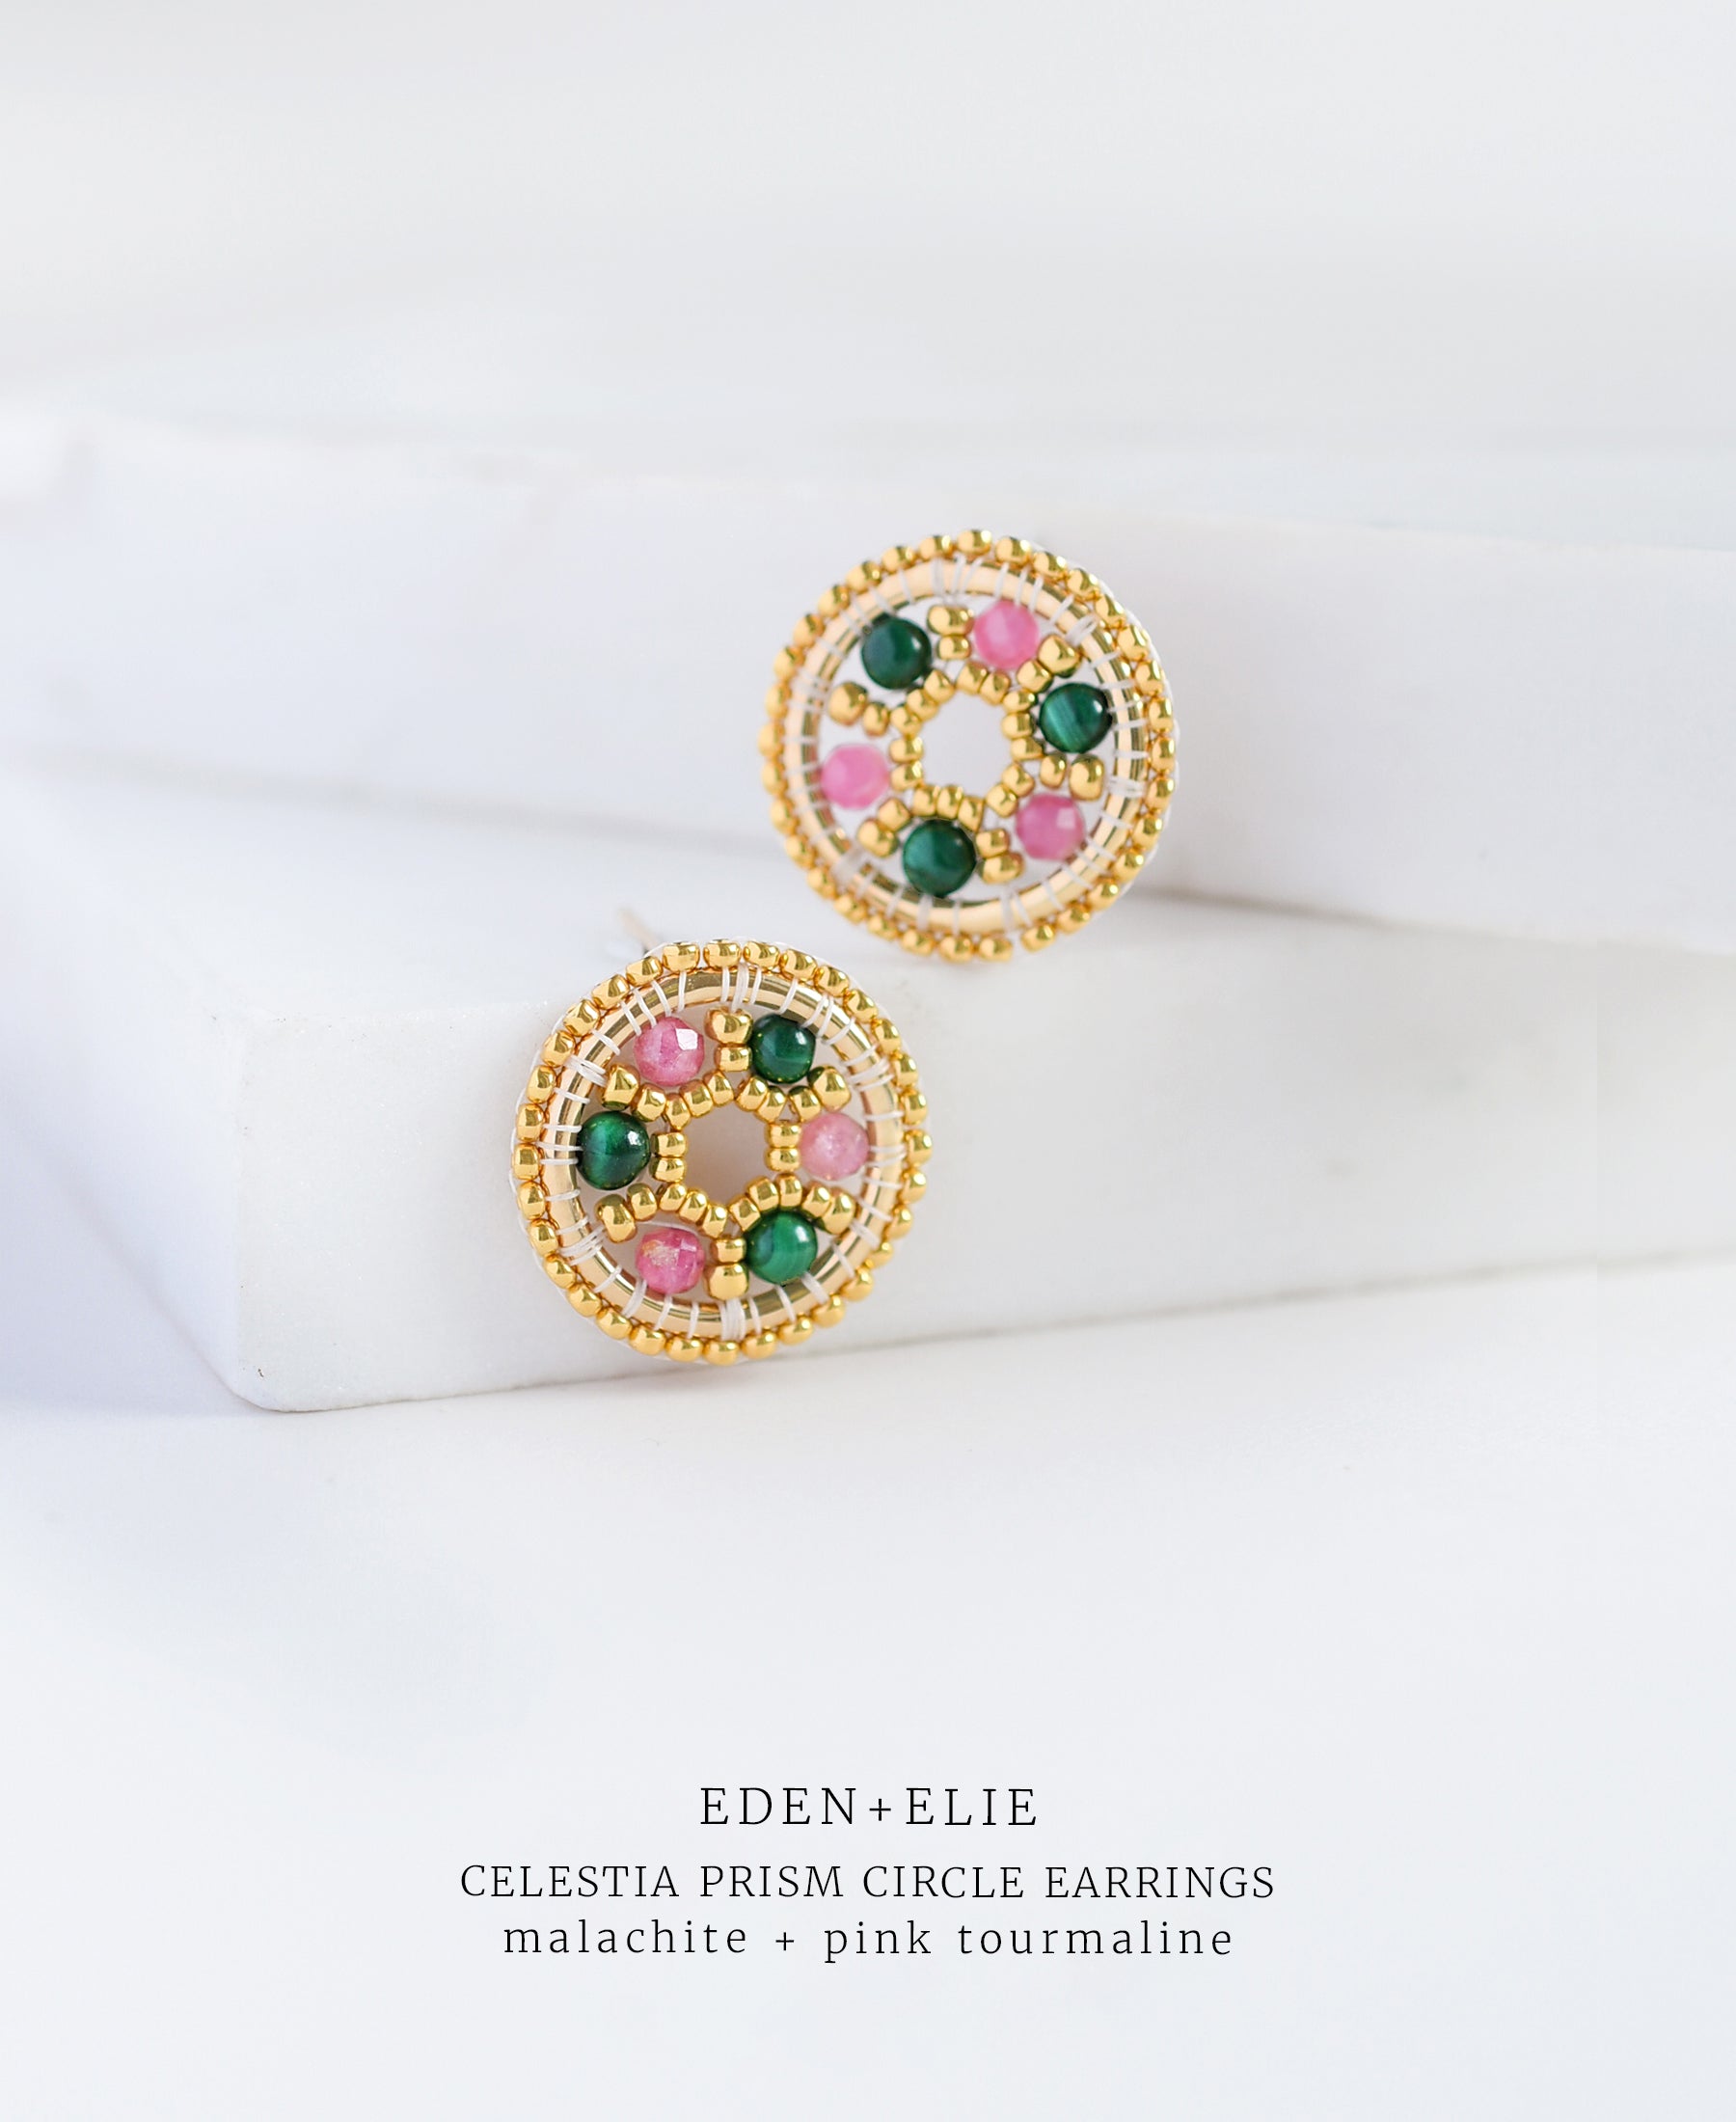 EDEN + ELIE Celestia Prism Circle Earrings - Malachite + Pink Tourmaline